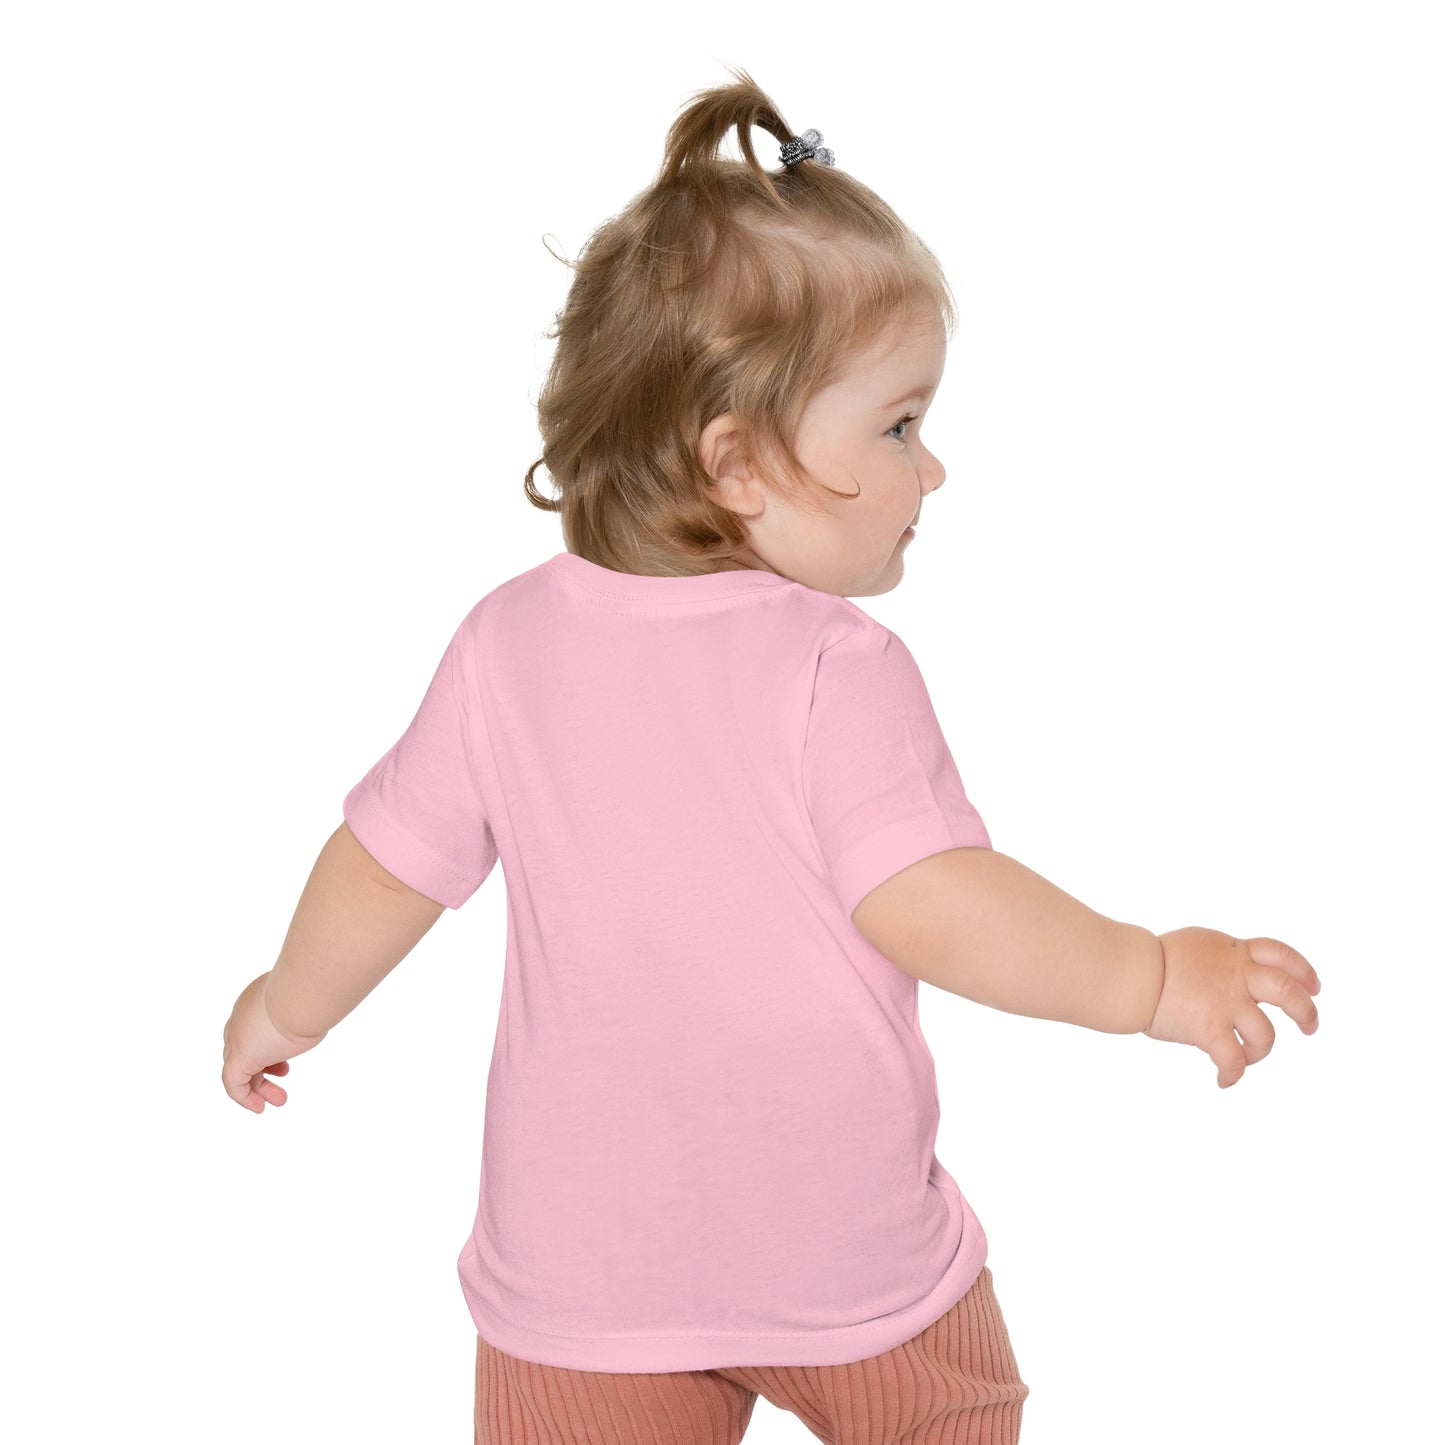 Little Miss Shenanigans - Baby Short Sleeve T-Shirt